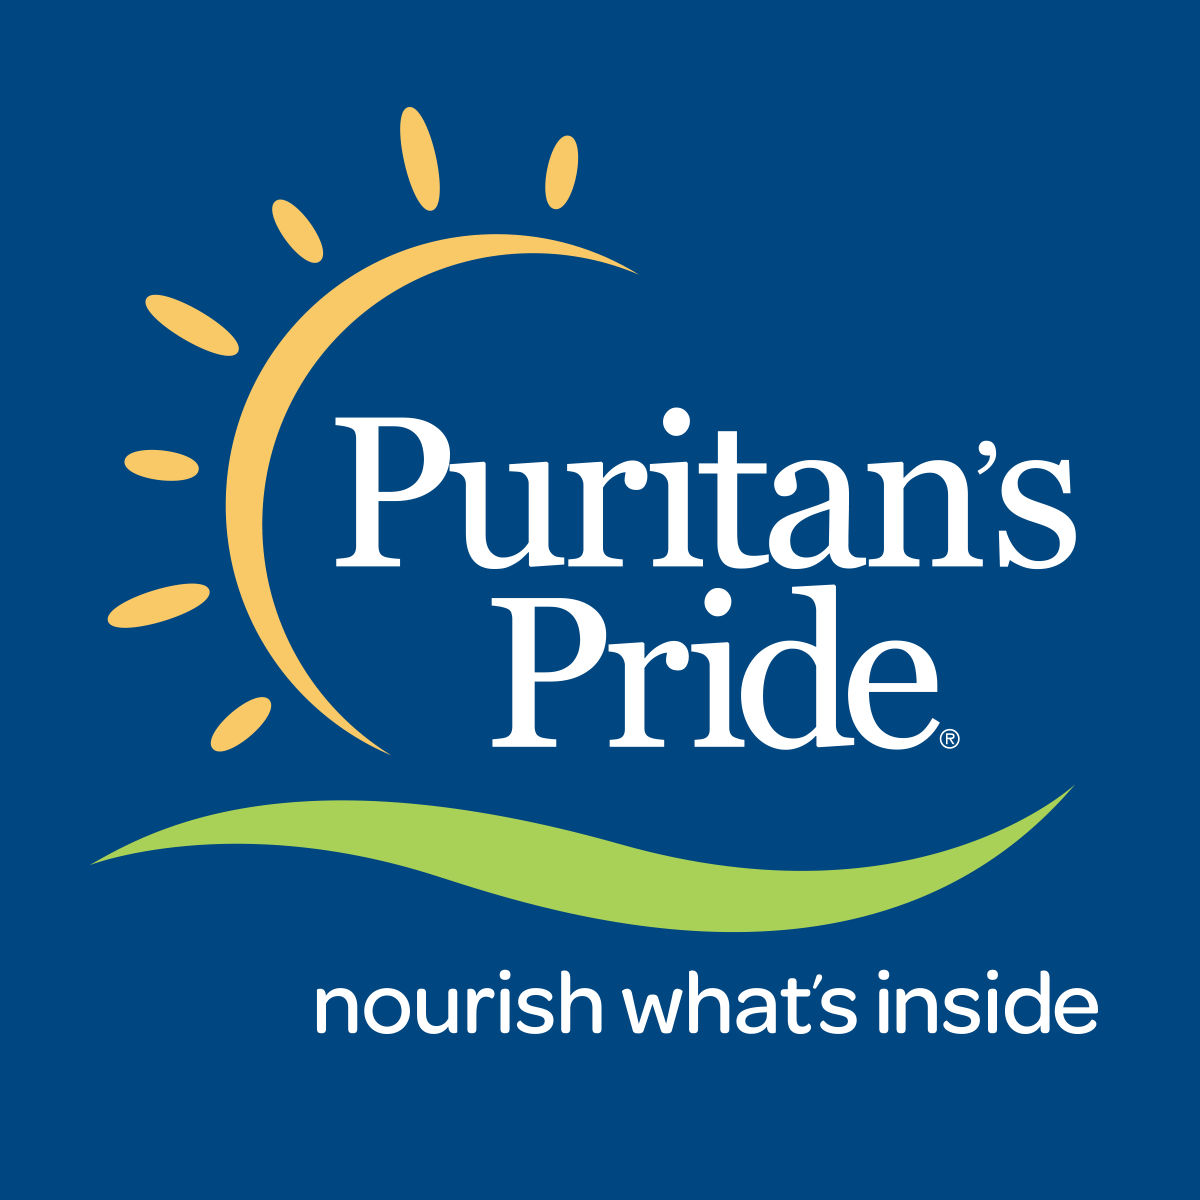 Puritan Logo